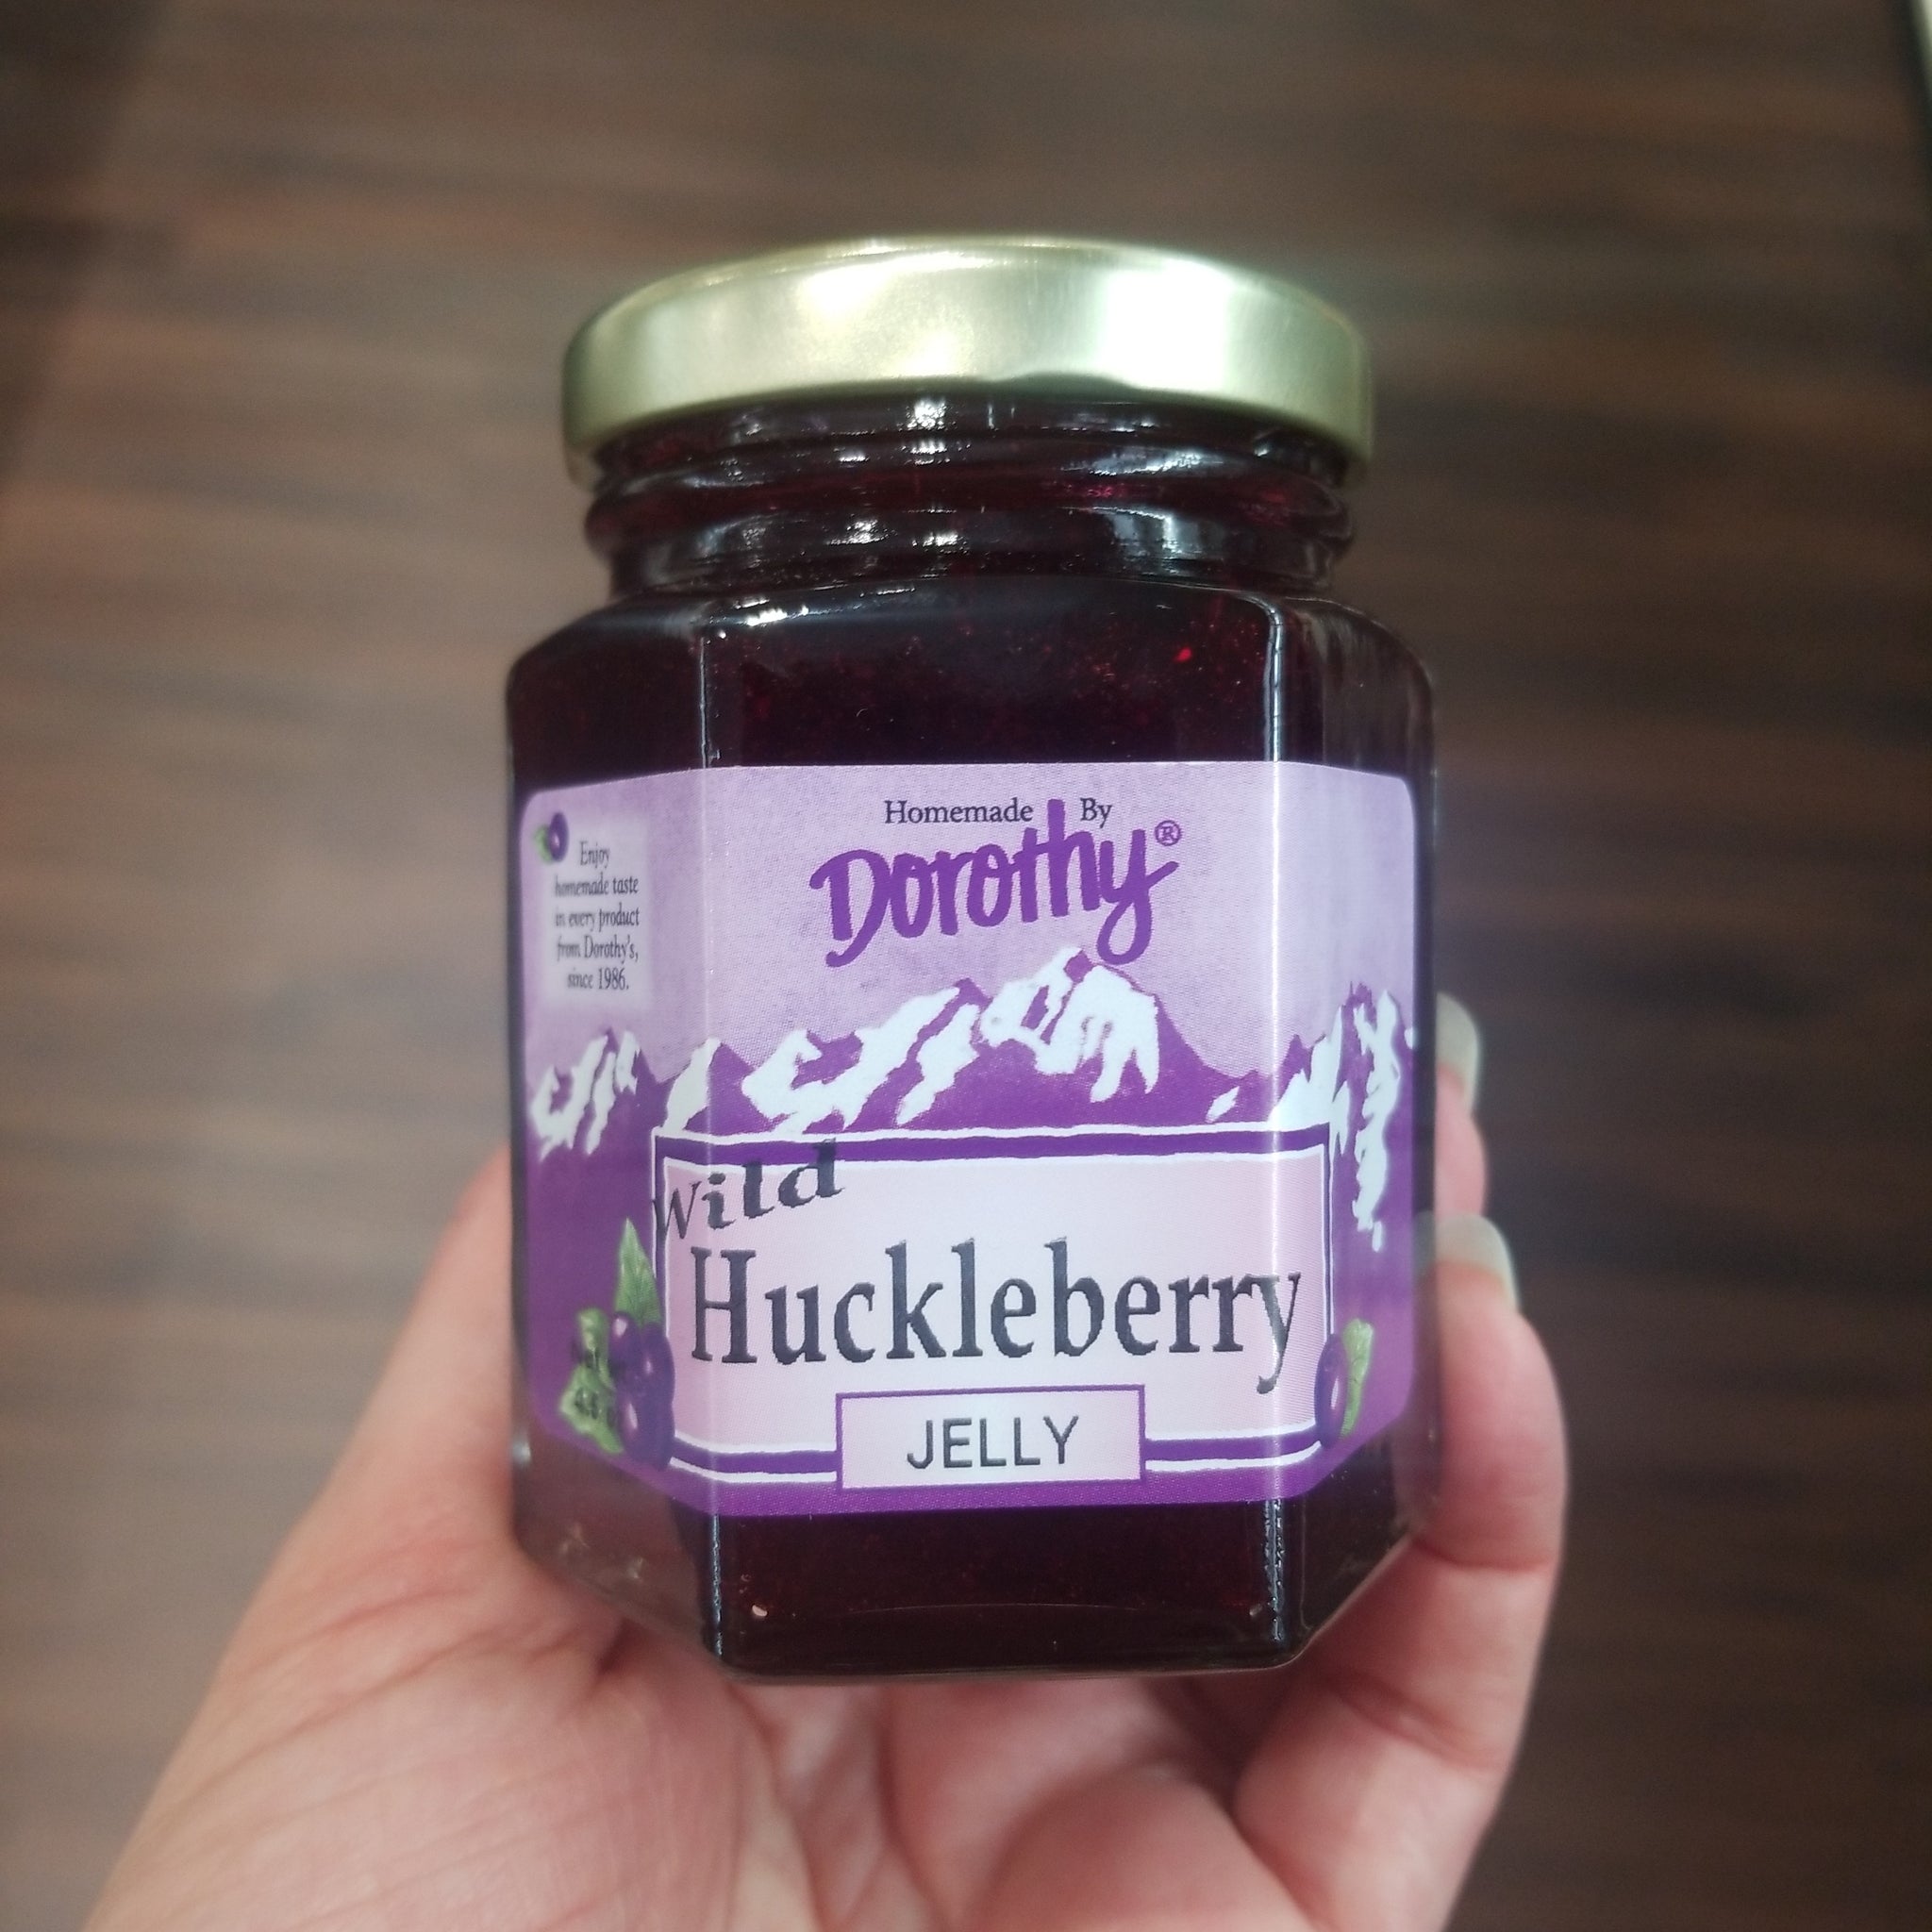 Huckleberry Jelly - Small Jar